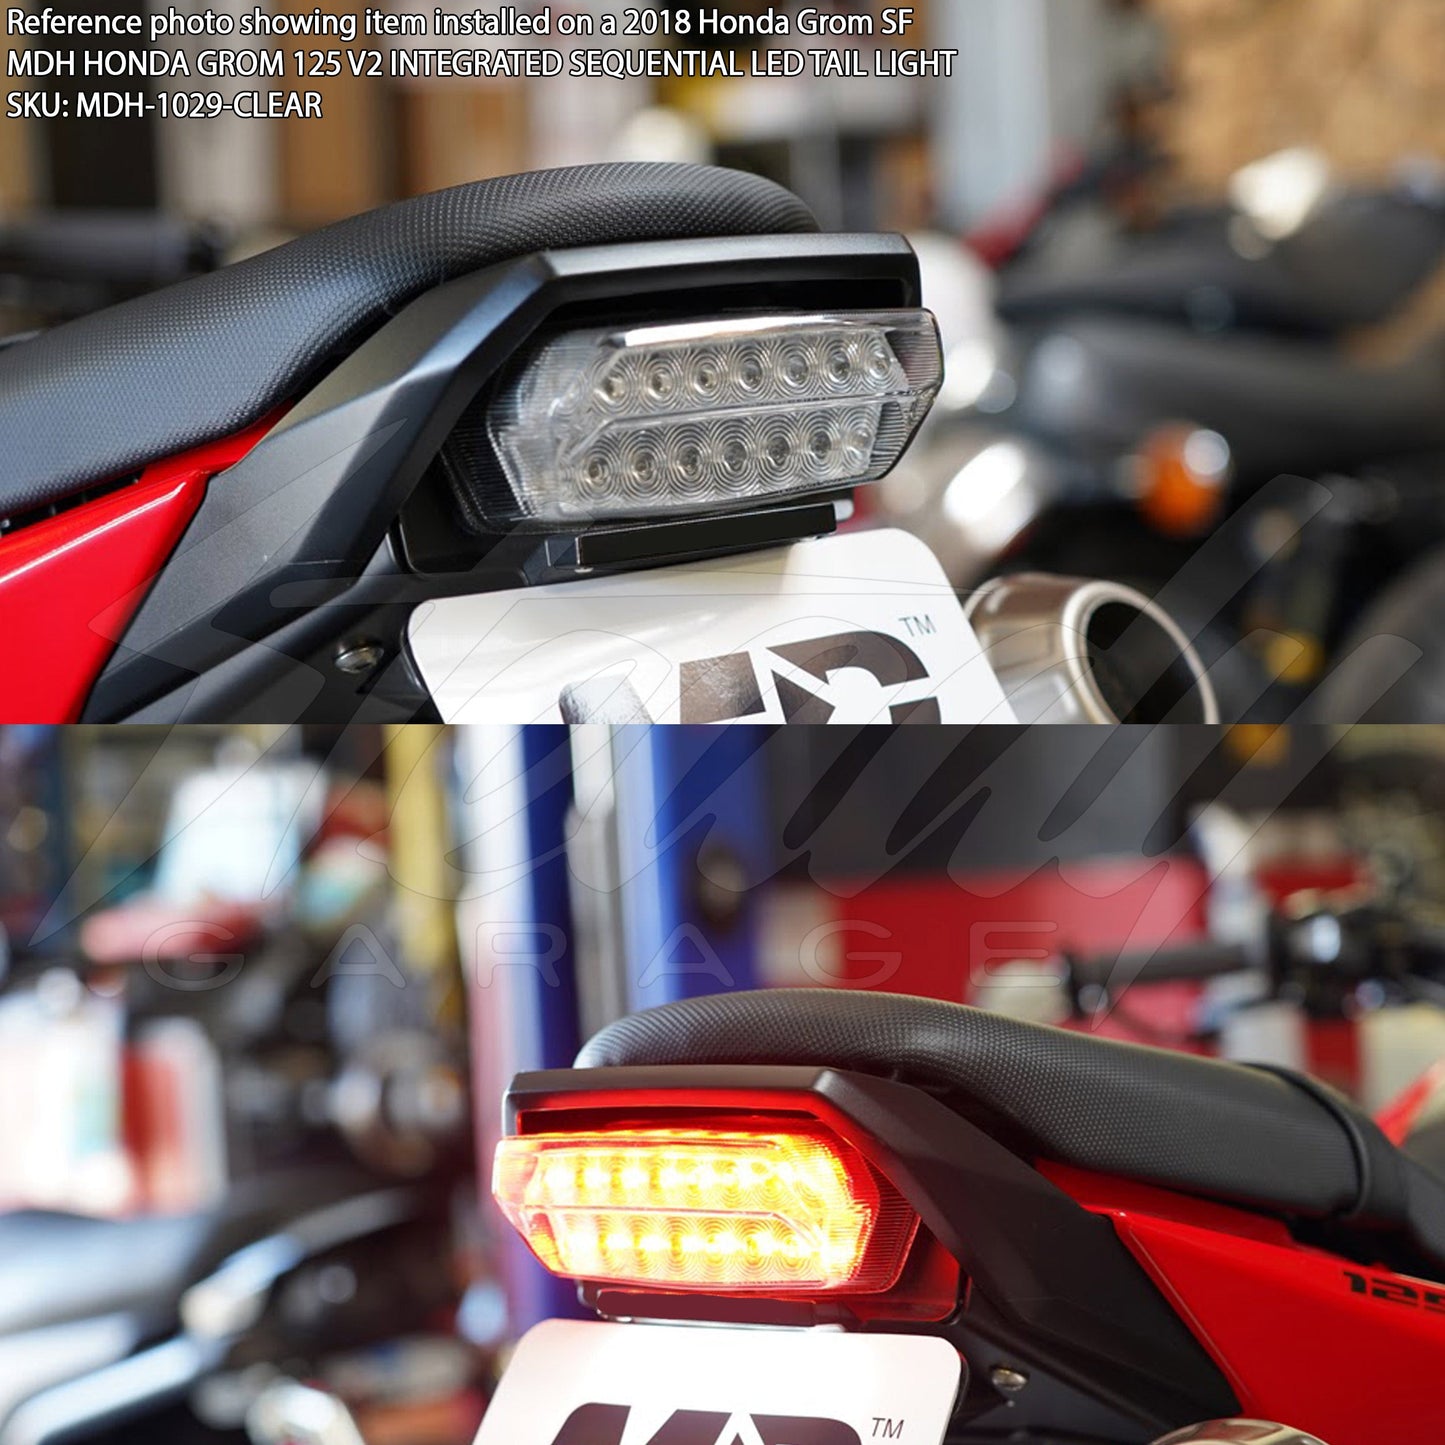 MDH Honda Grom 125 V2 Integrated Sequential LED Tail Light (2013-2021)